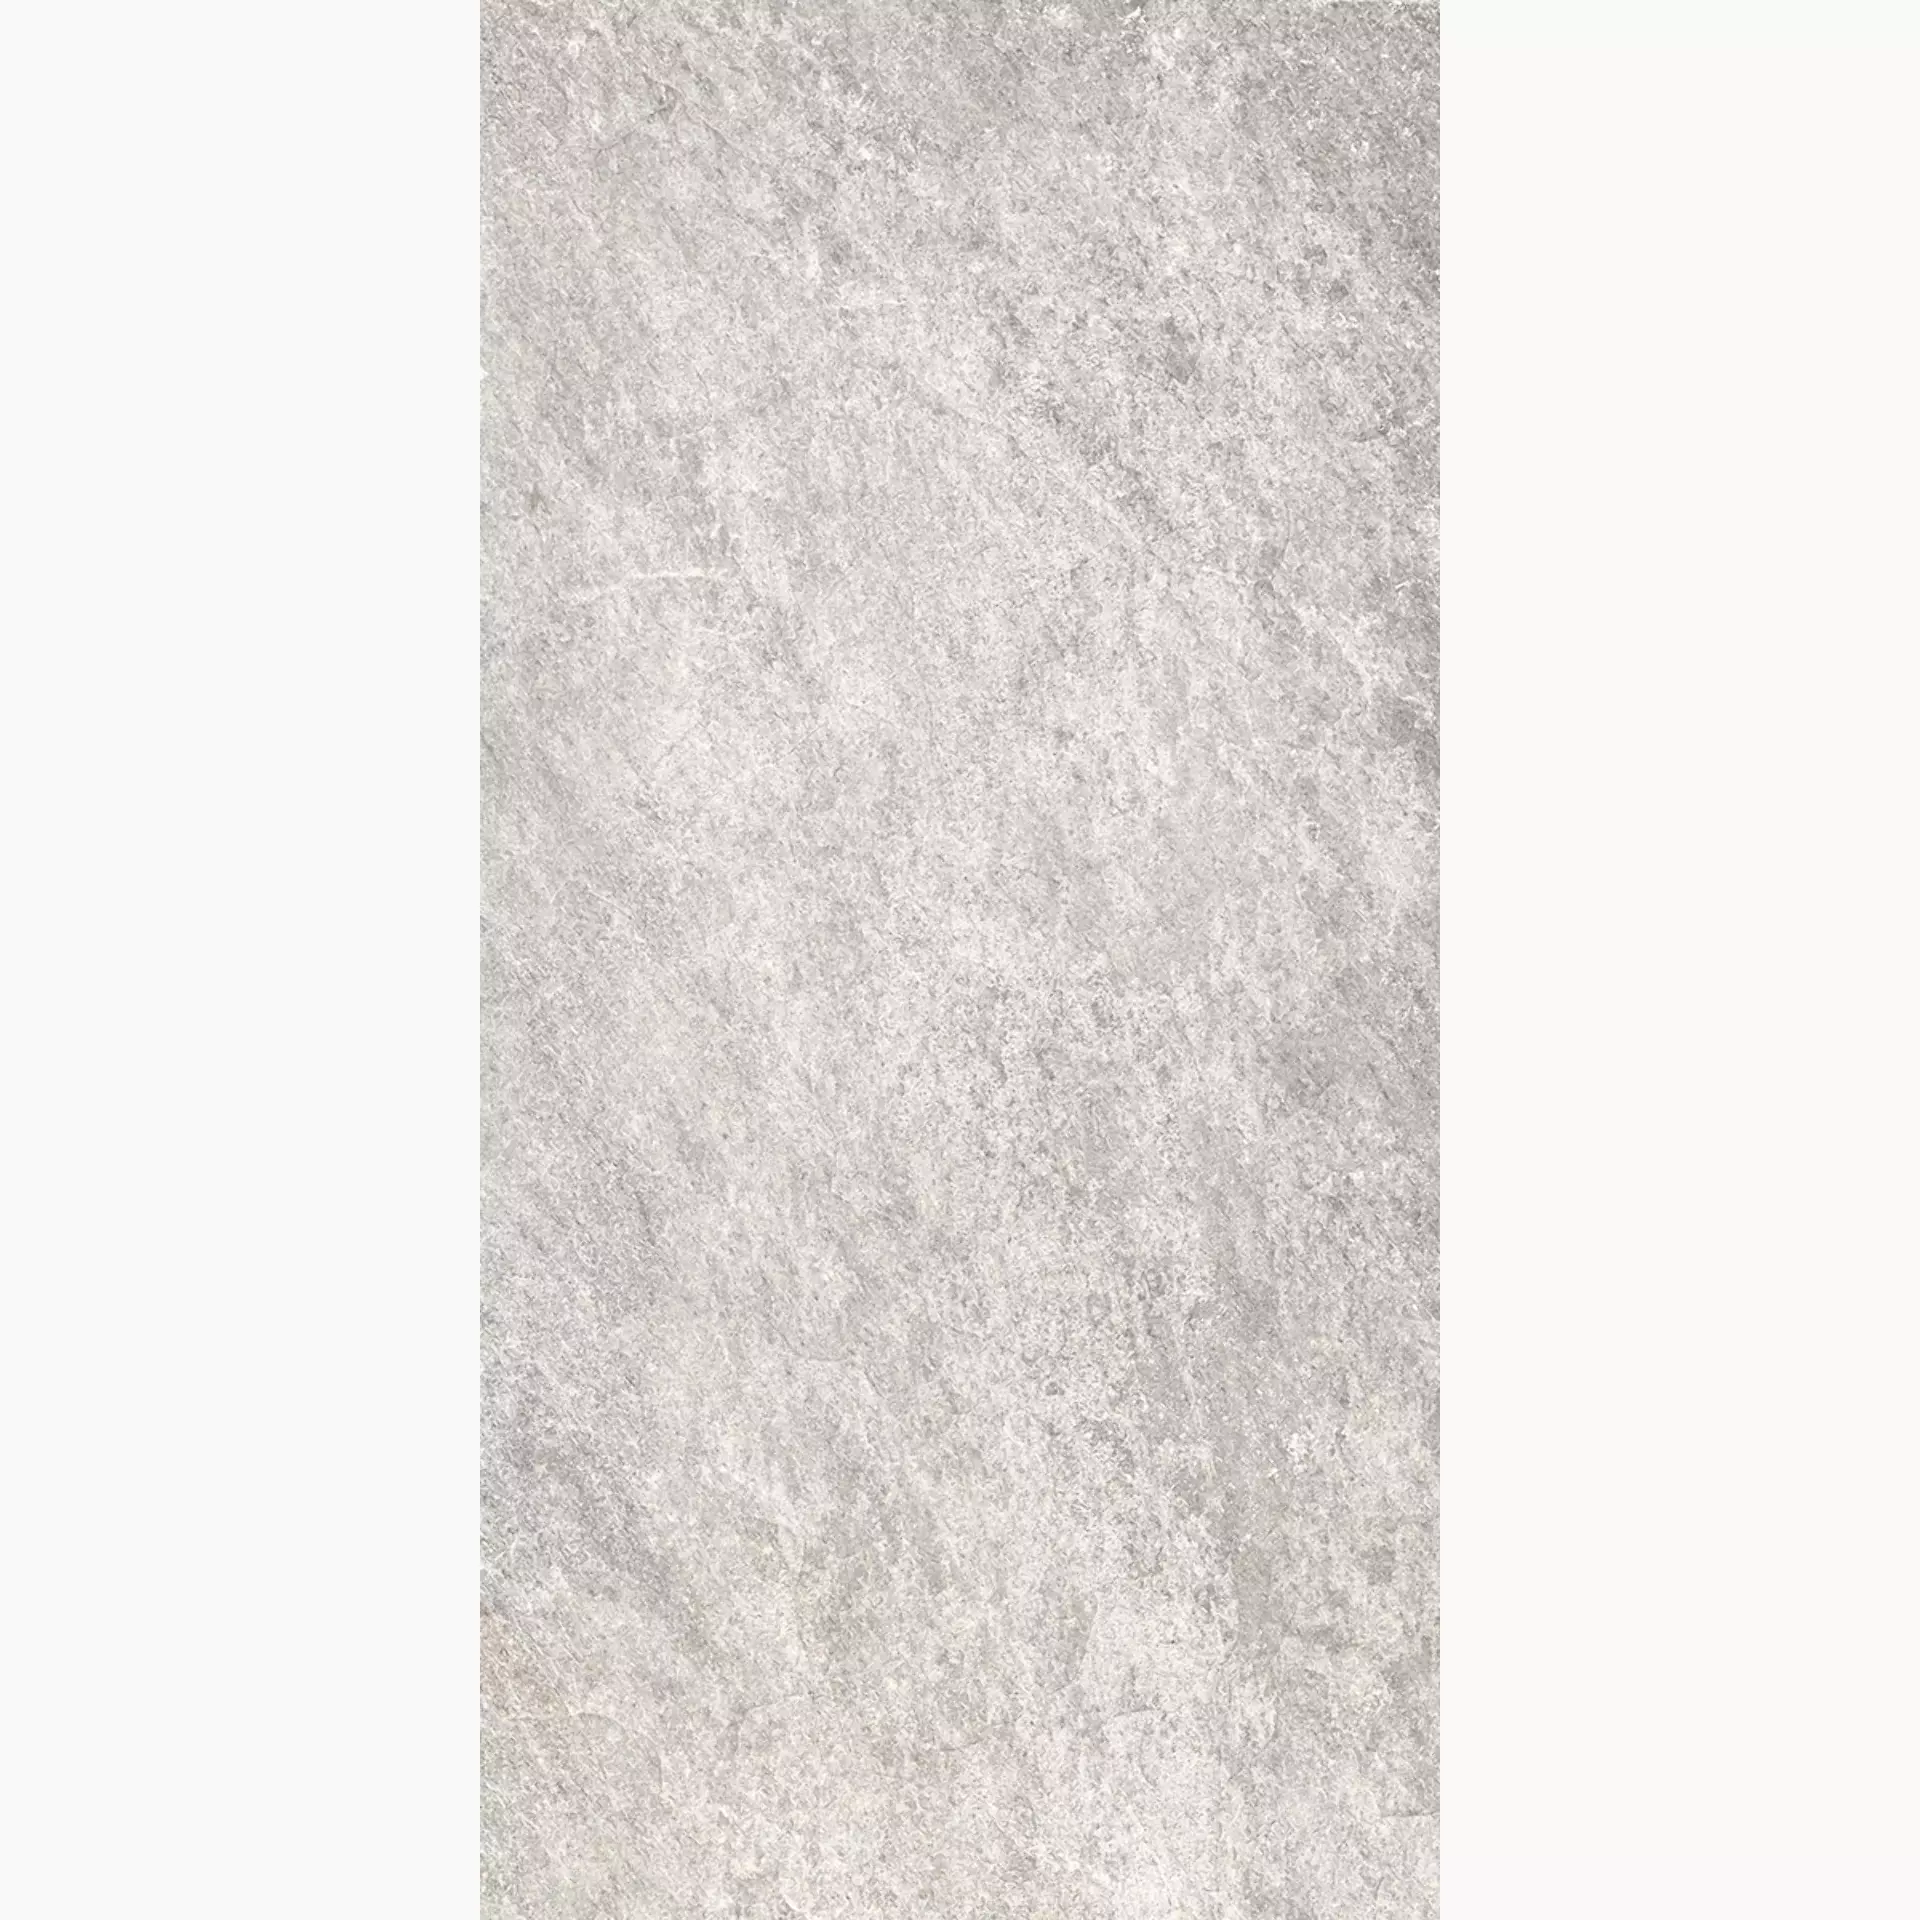 Rondine Quarzi Light Grey Naturale J87300 30x60cm rectified 9,5mm